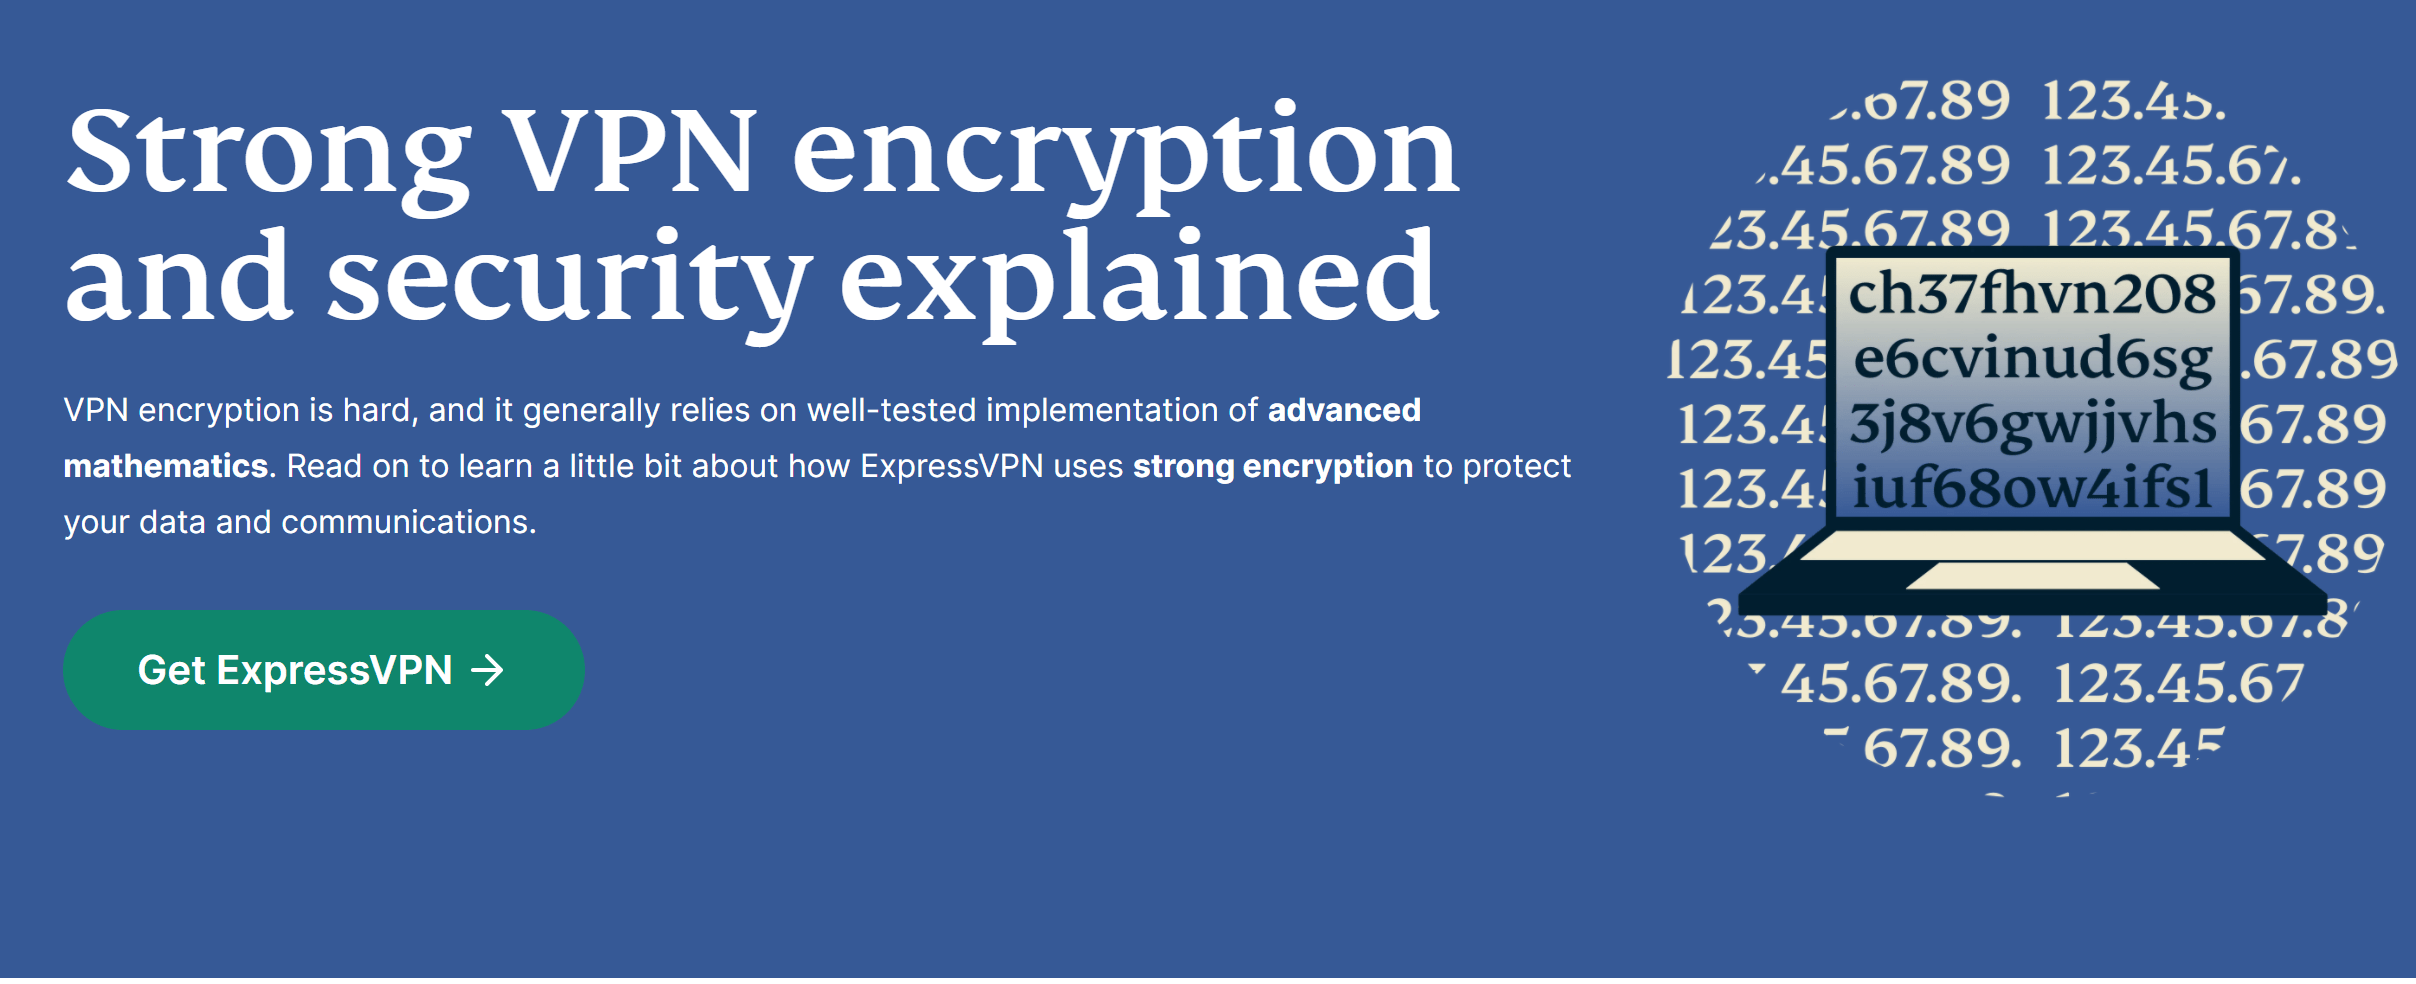 Express VPN encryption